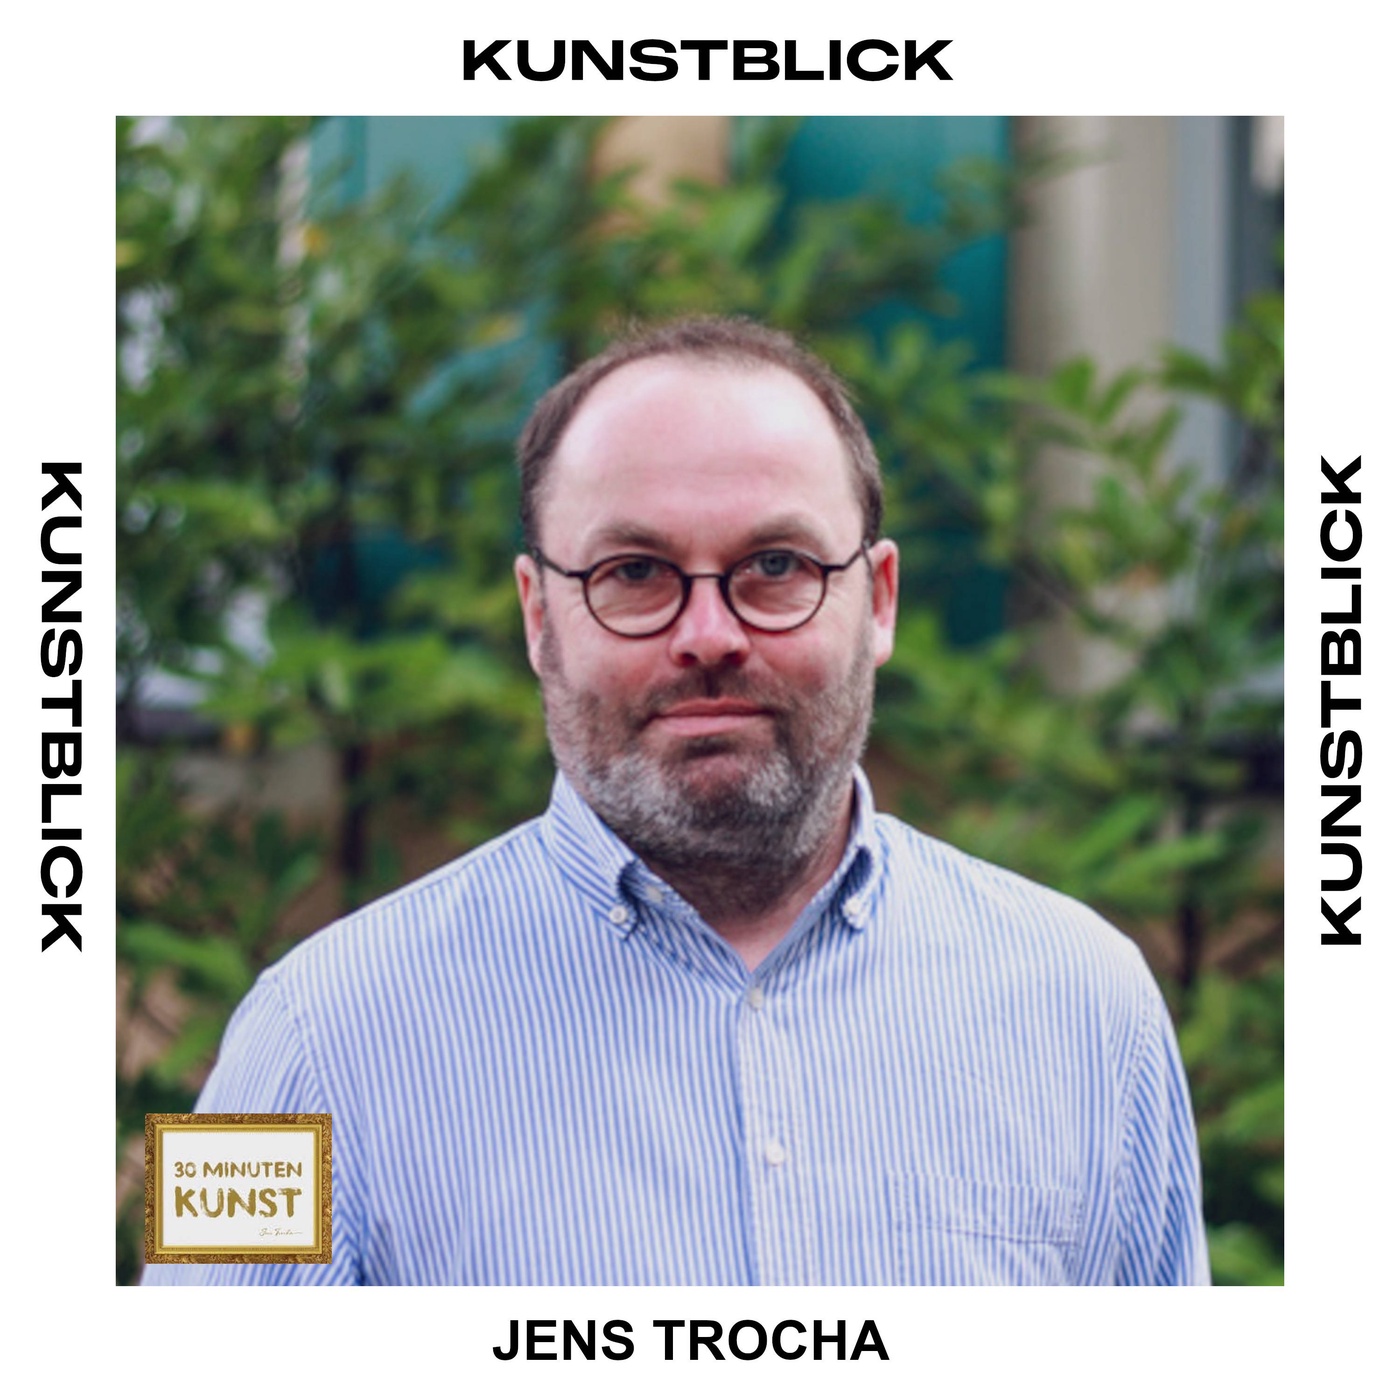 Jens Trocha - Journalist und Podcast Host